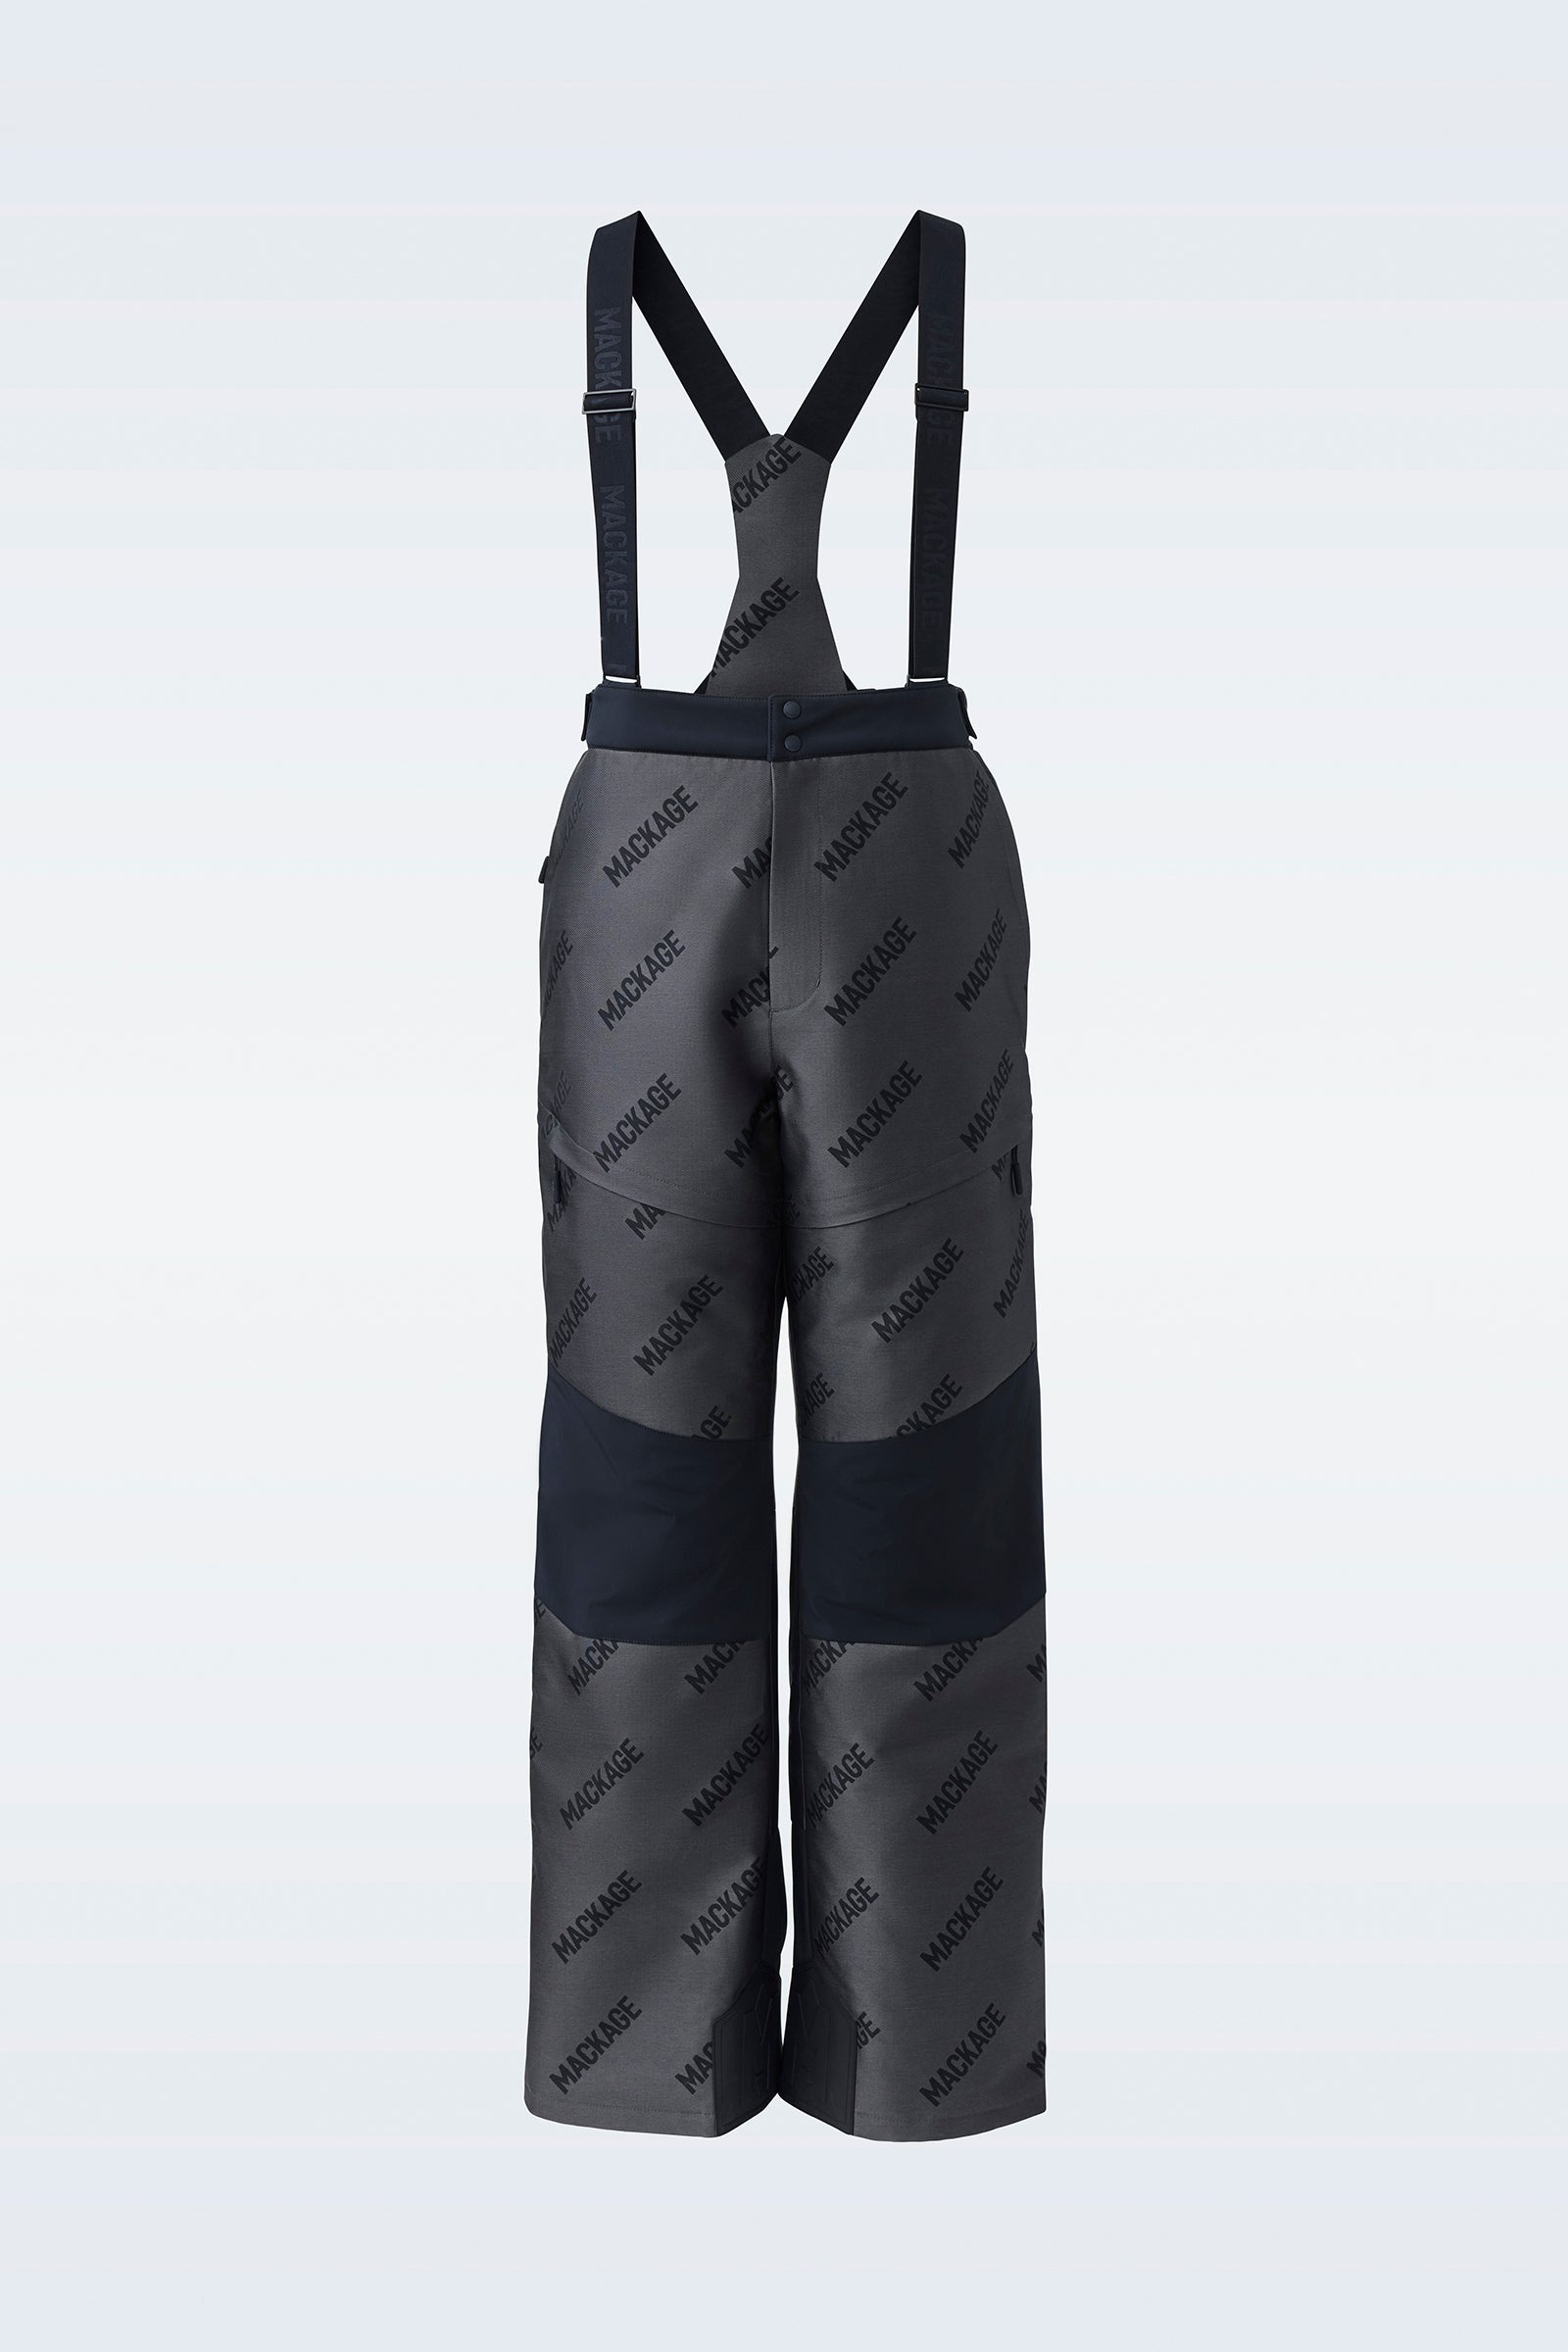 SHANE-JMG Technical ski pants with jacquard logo pattern and suspenders - 1